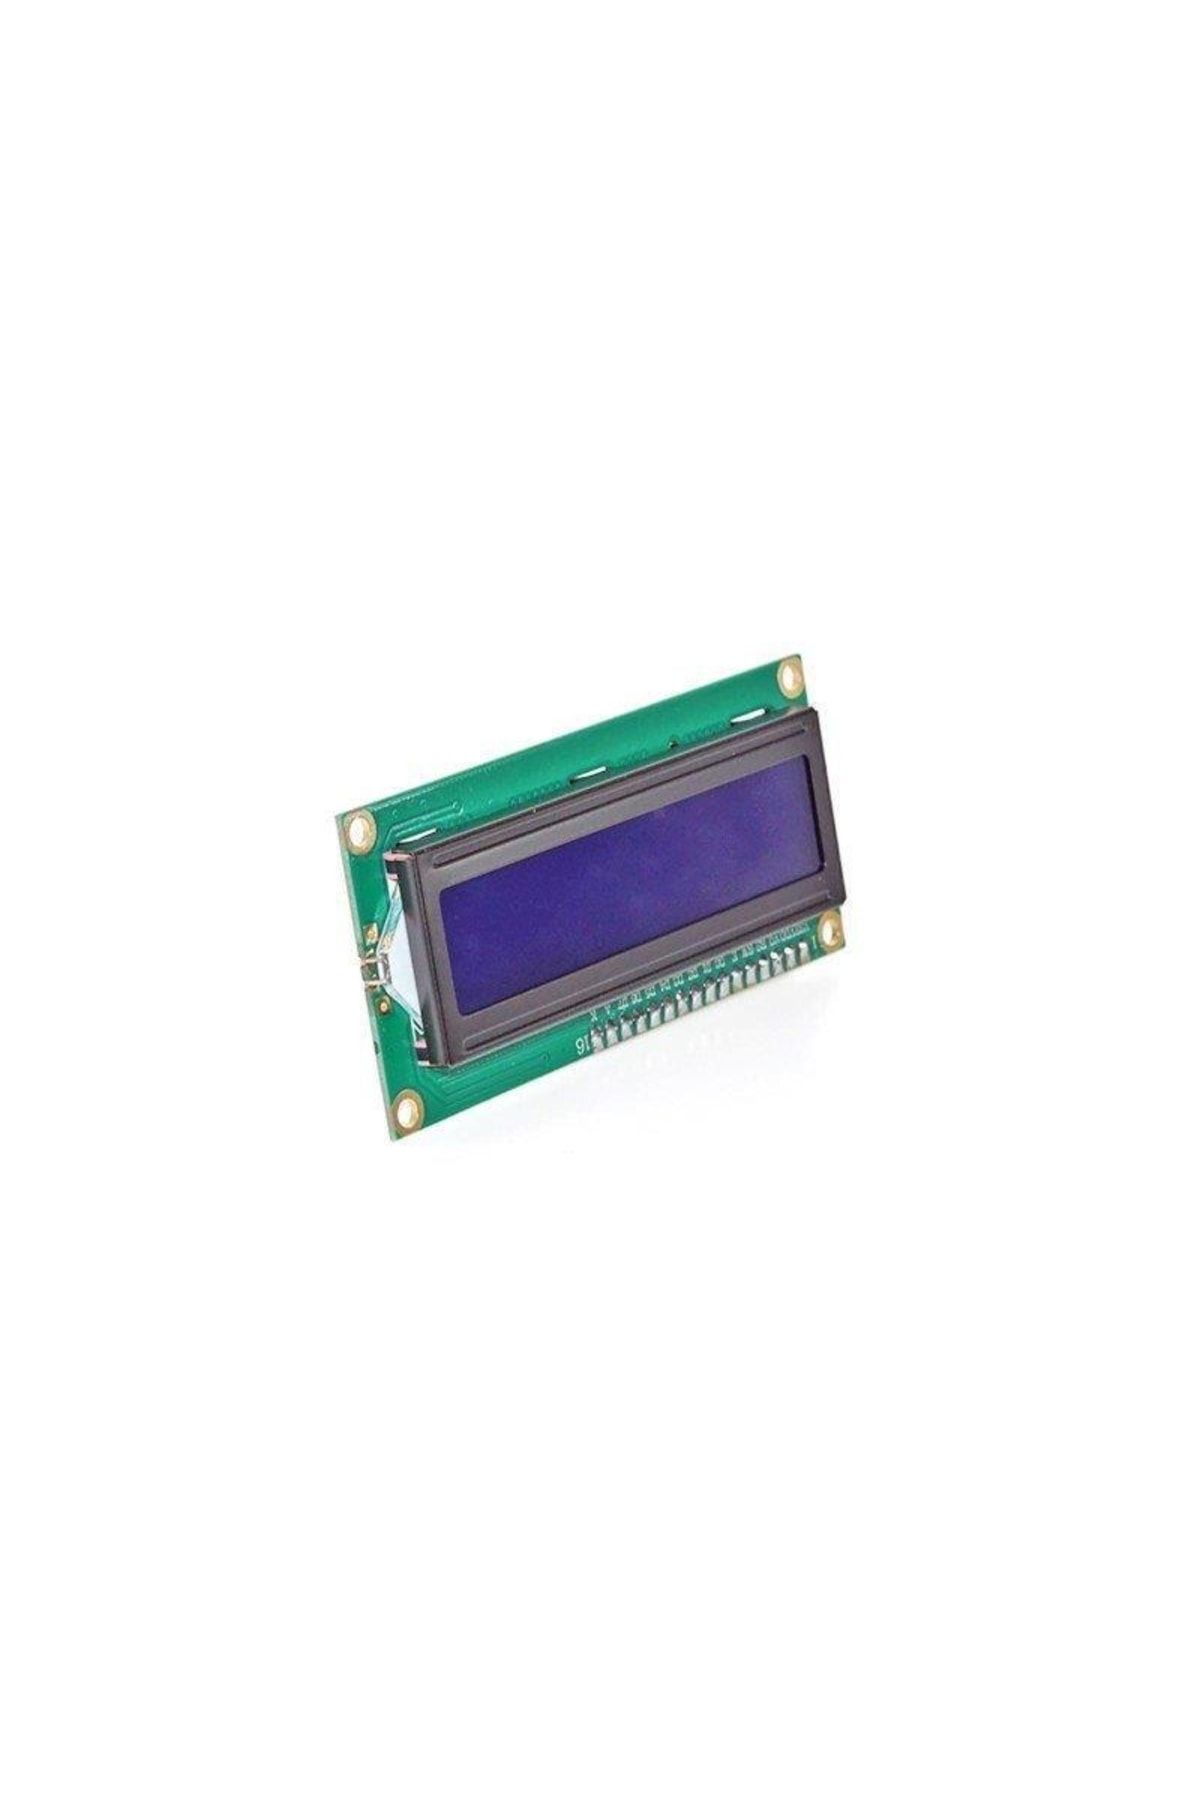 electroon Arduino Lcd1602 I2c Lcd Ekran Modülü - Mavi